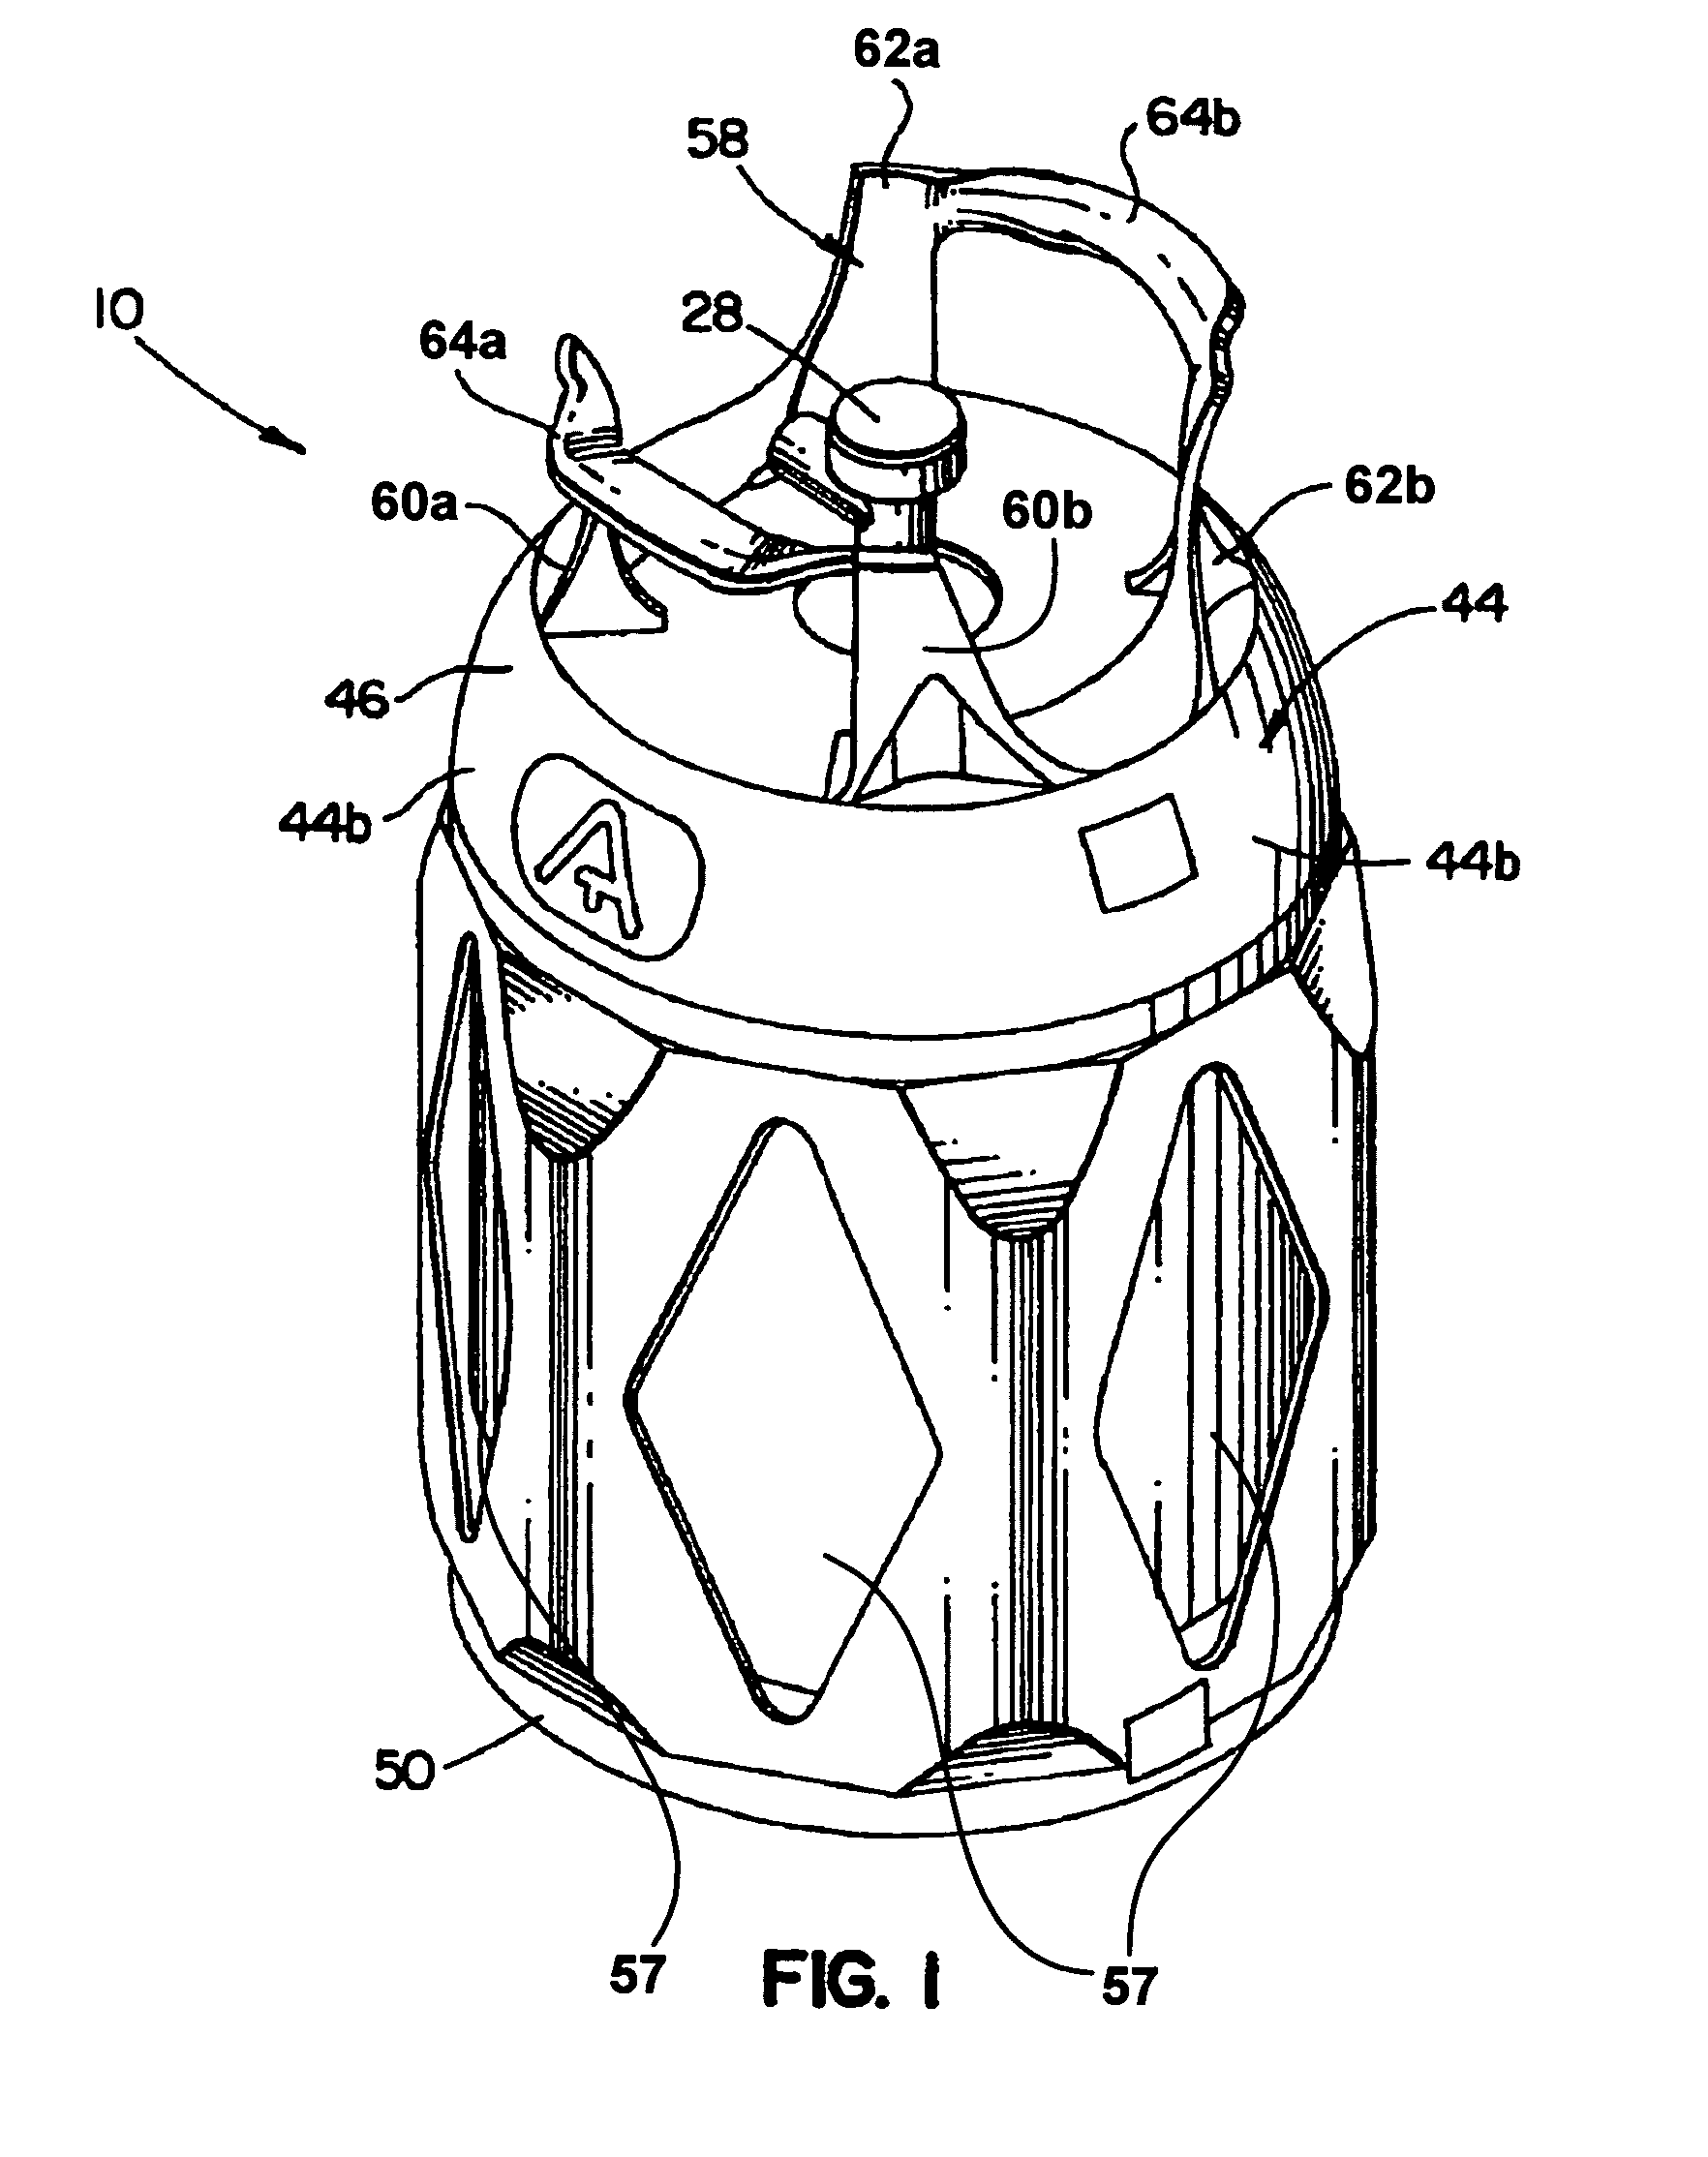 Hybrid pressure vessel with separable jacket